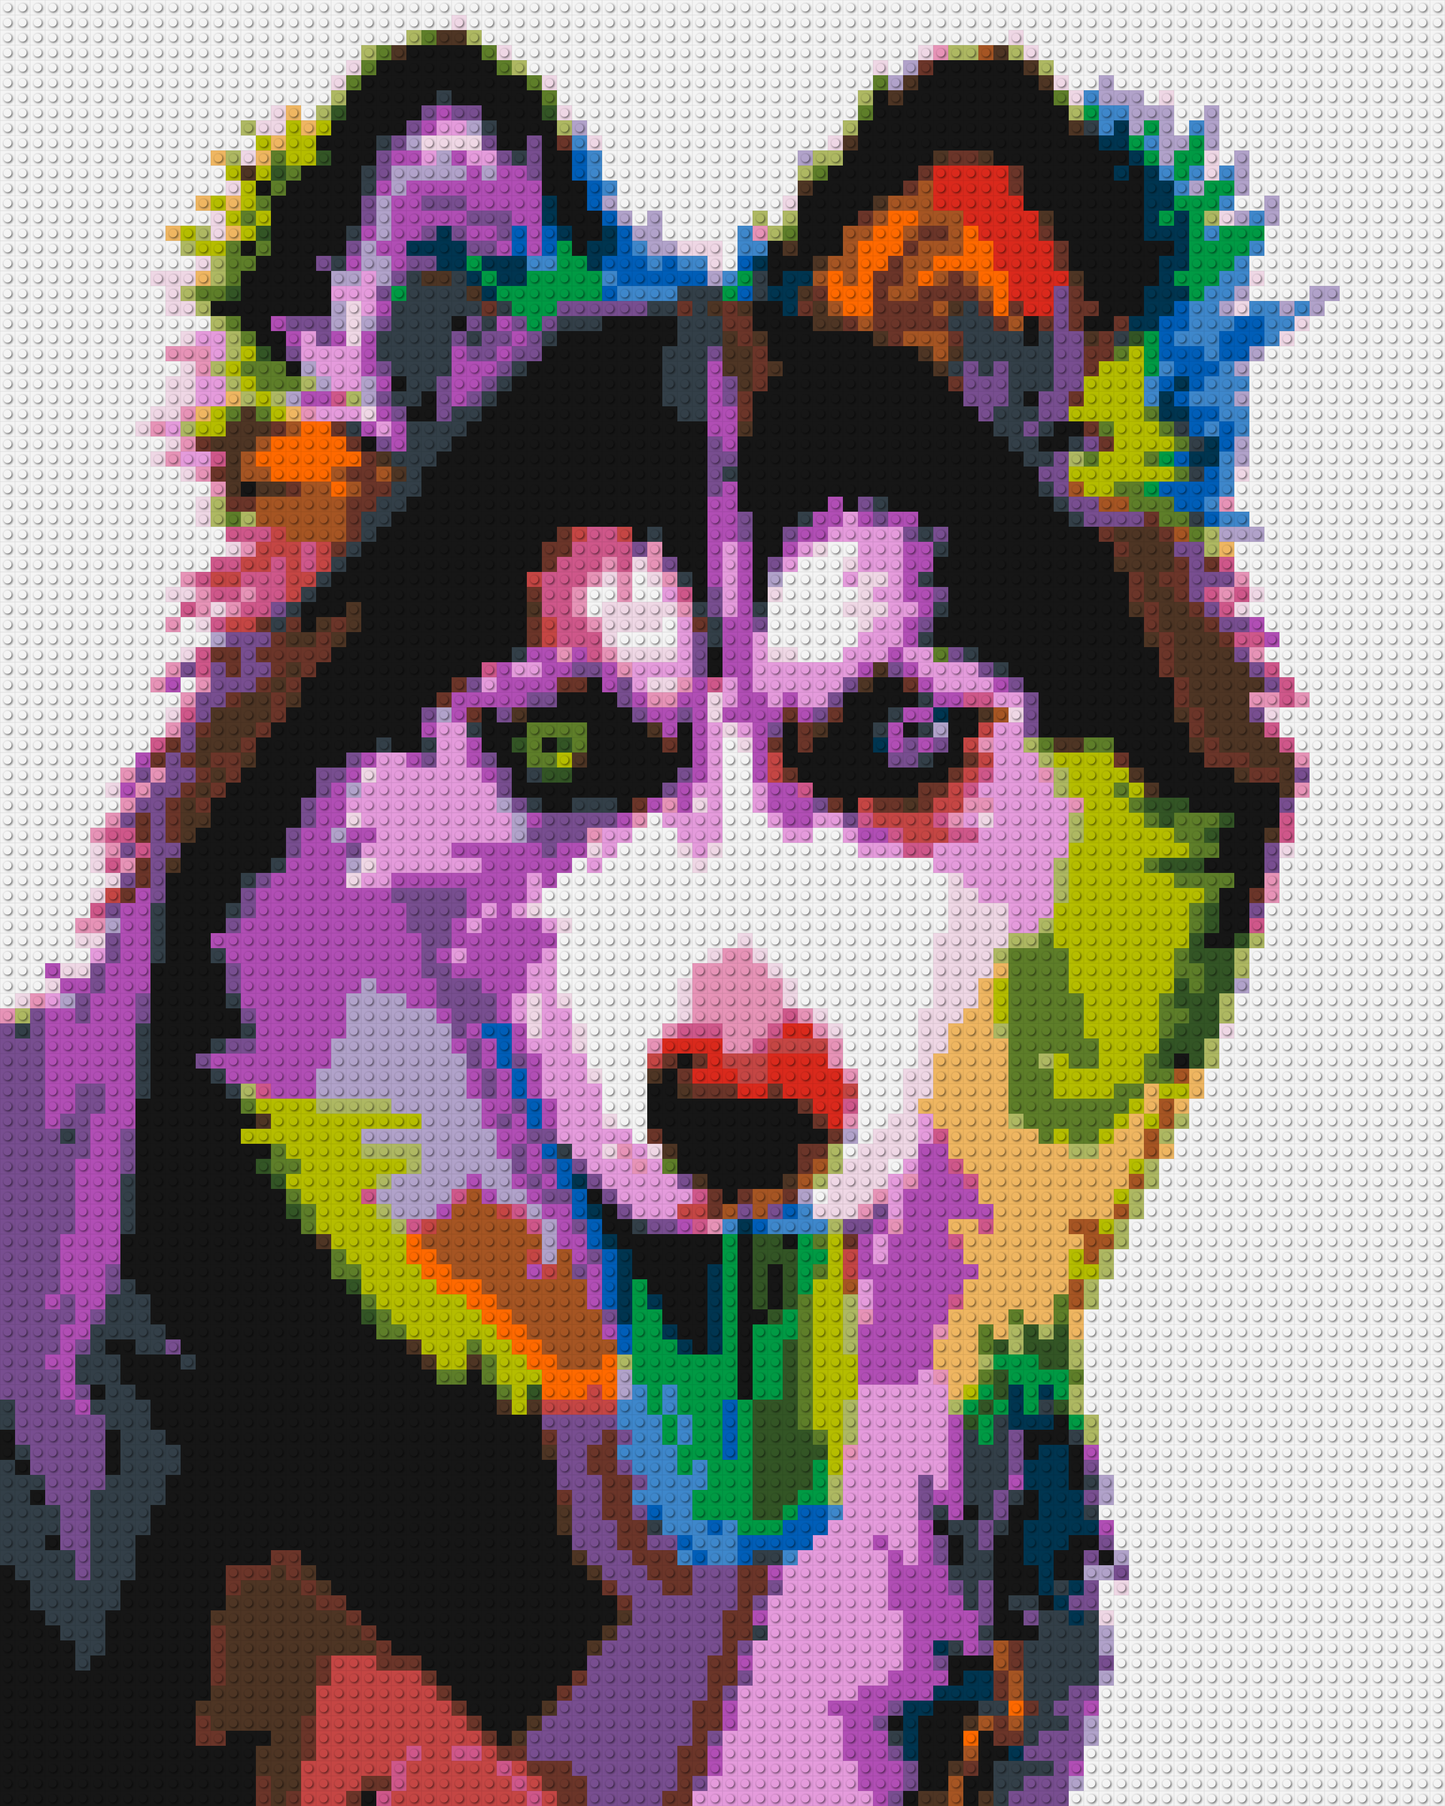 Husky Colourful Pop Art - Brick Art Mosaic Kit